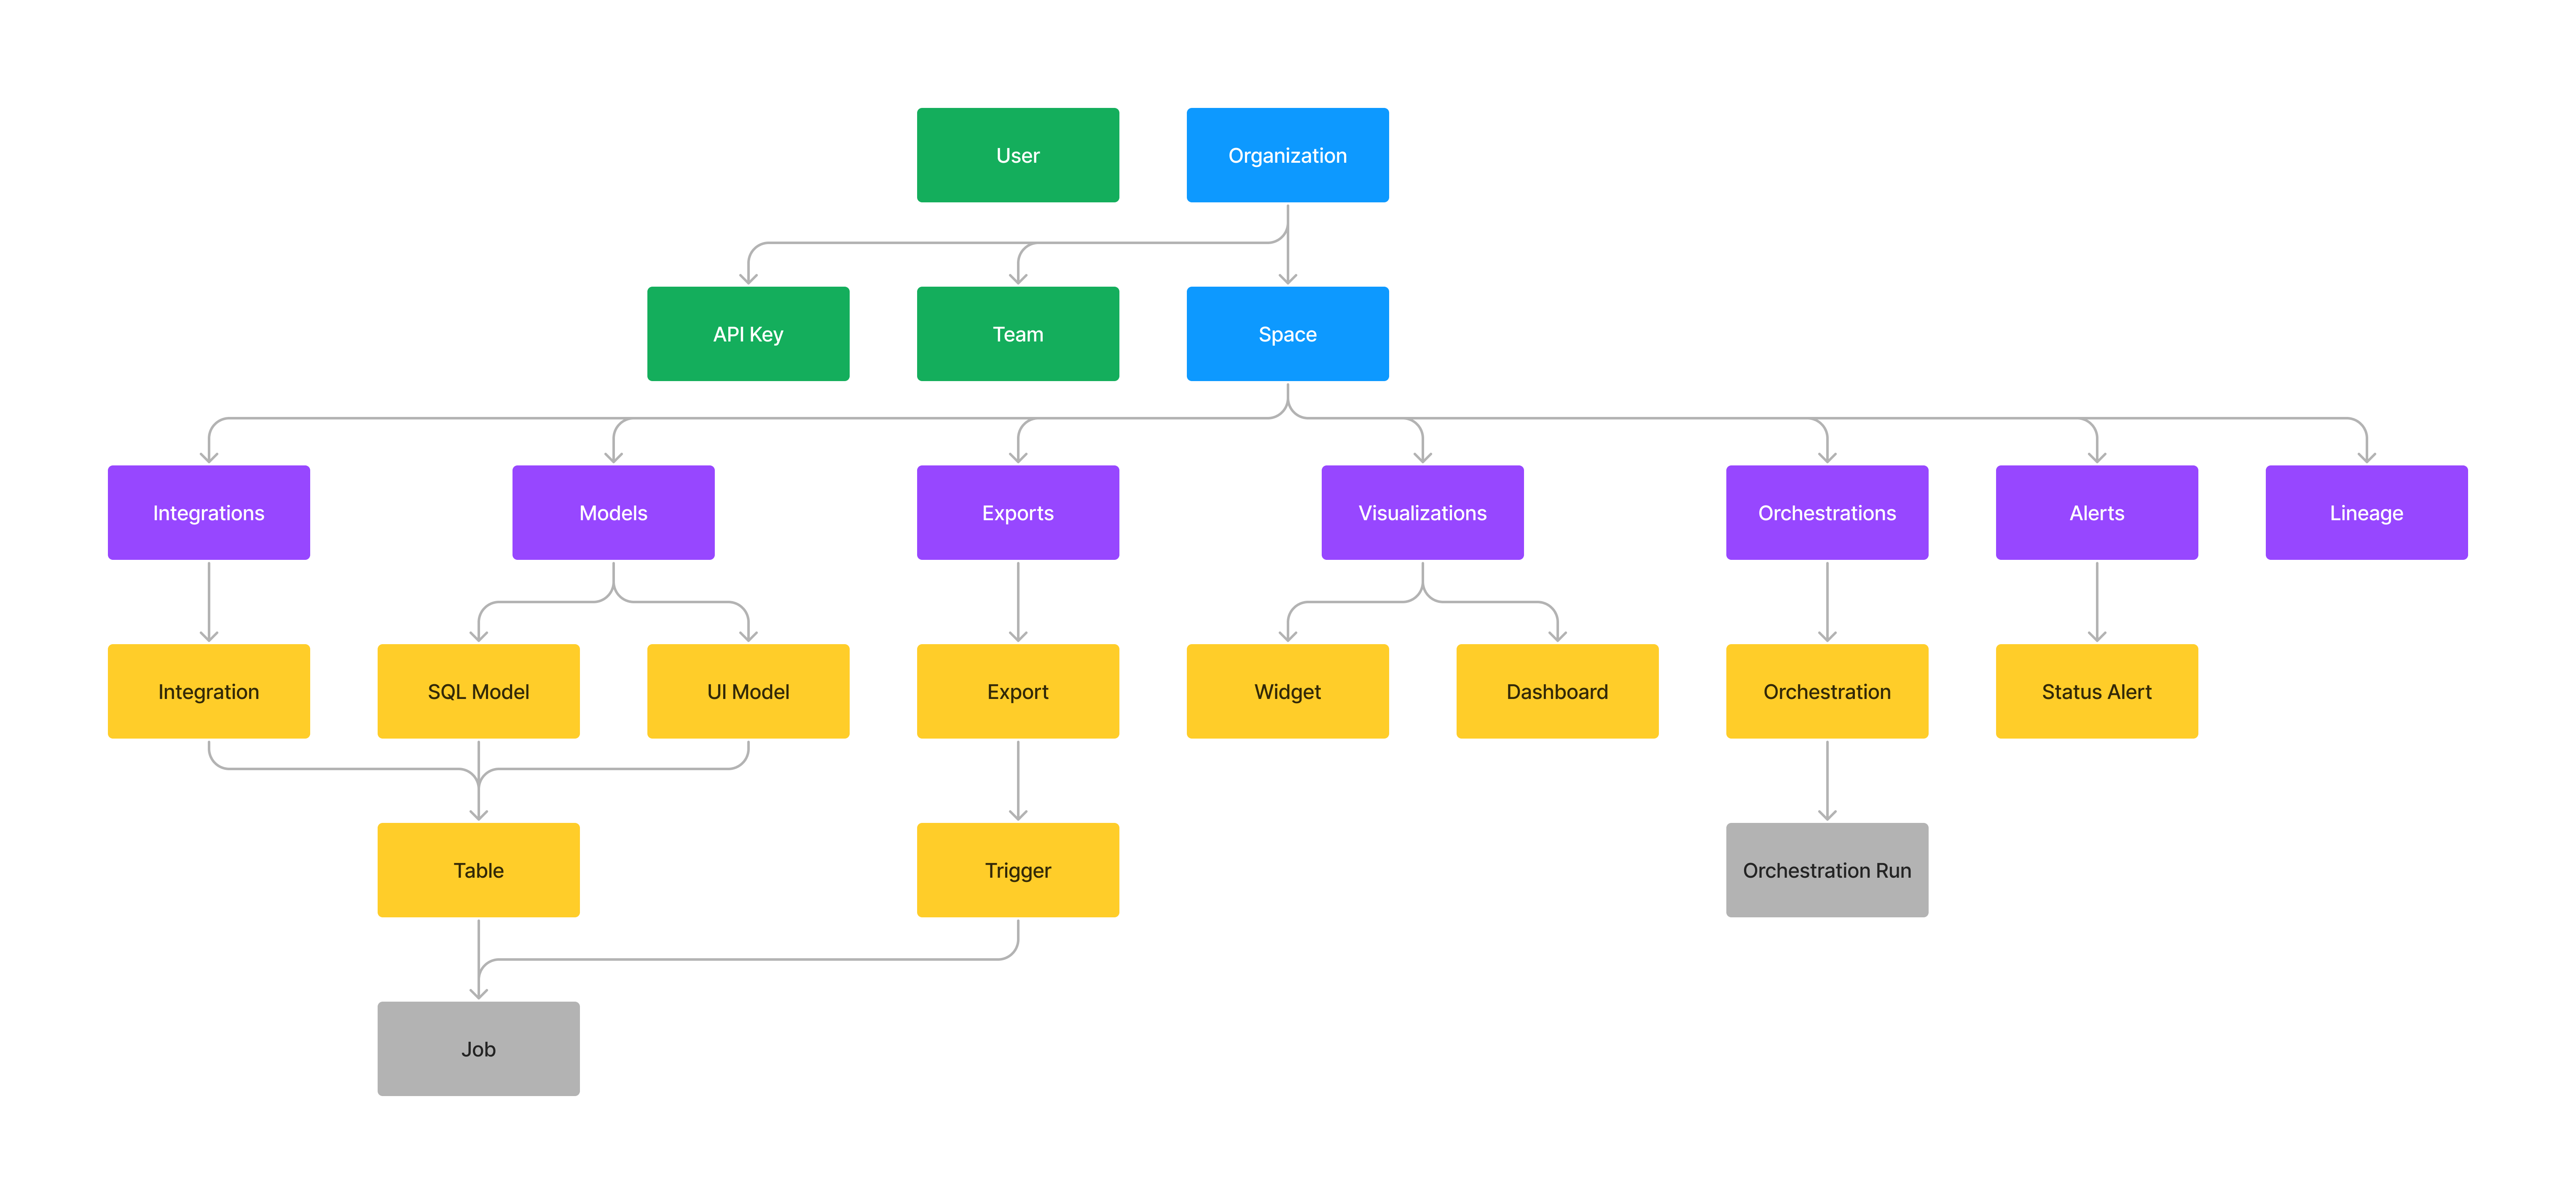 Resource hierarchy. 

Legend: Green → subjects, blue → organization & space, purple → modules, yellow → data assets, grey → jobs & runs